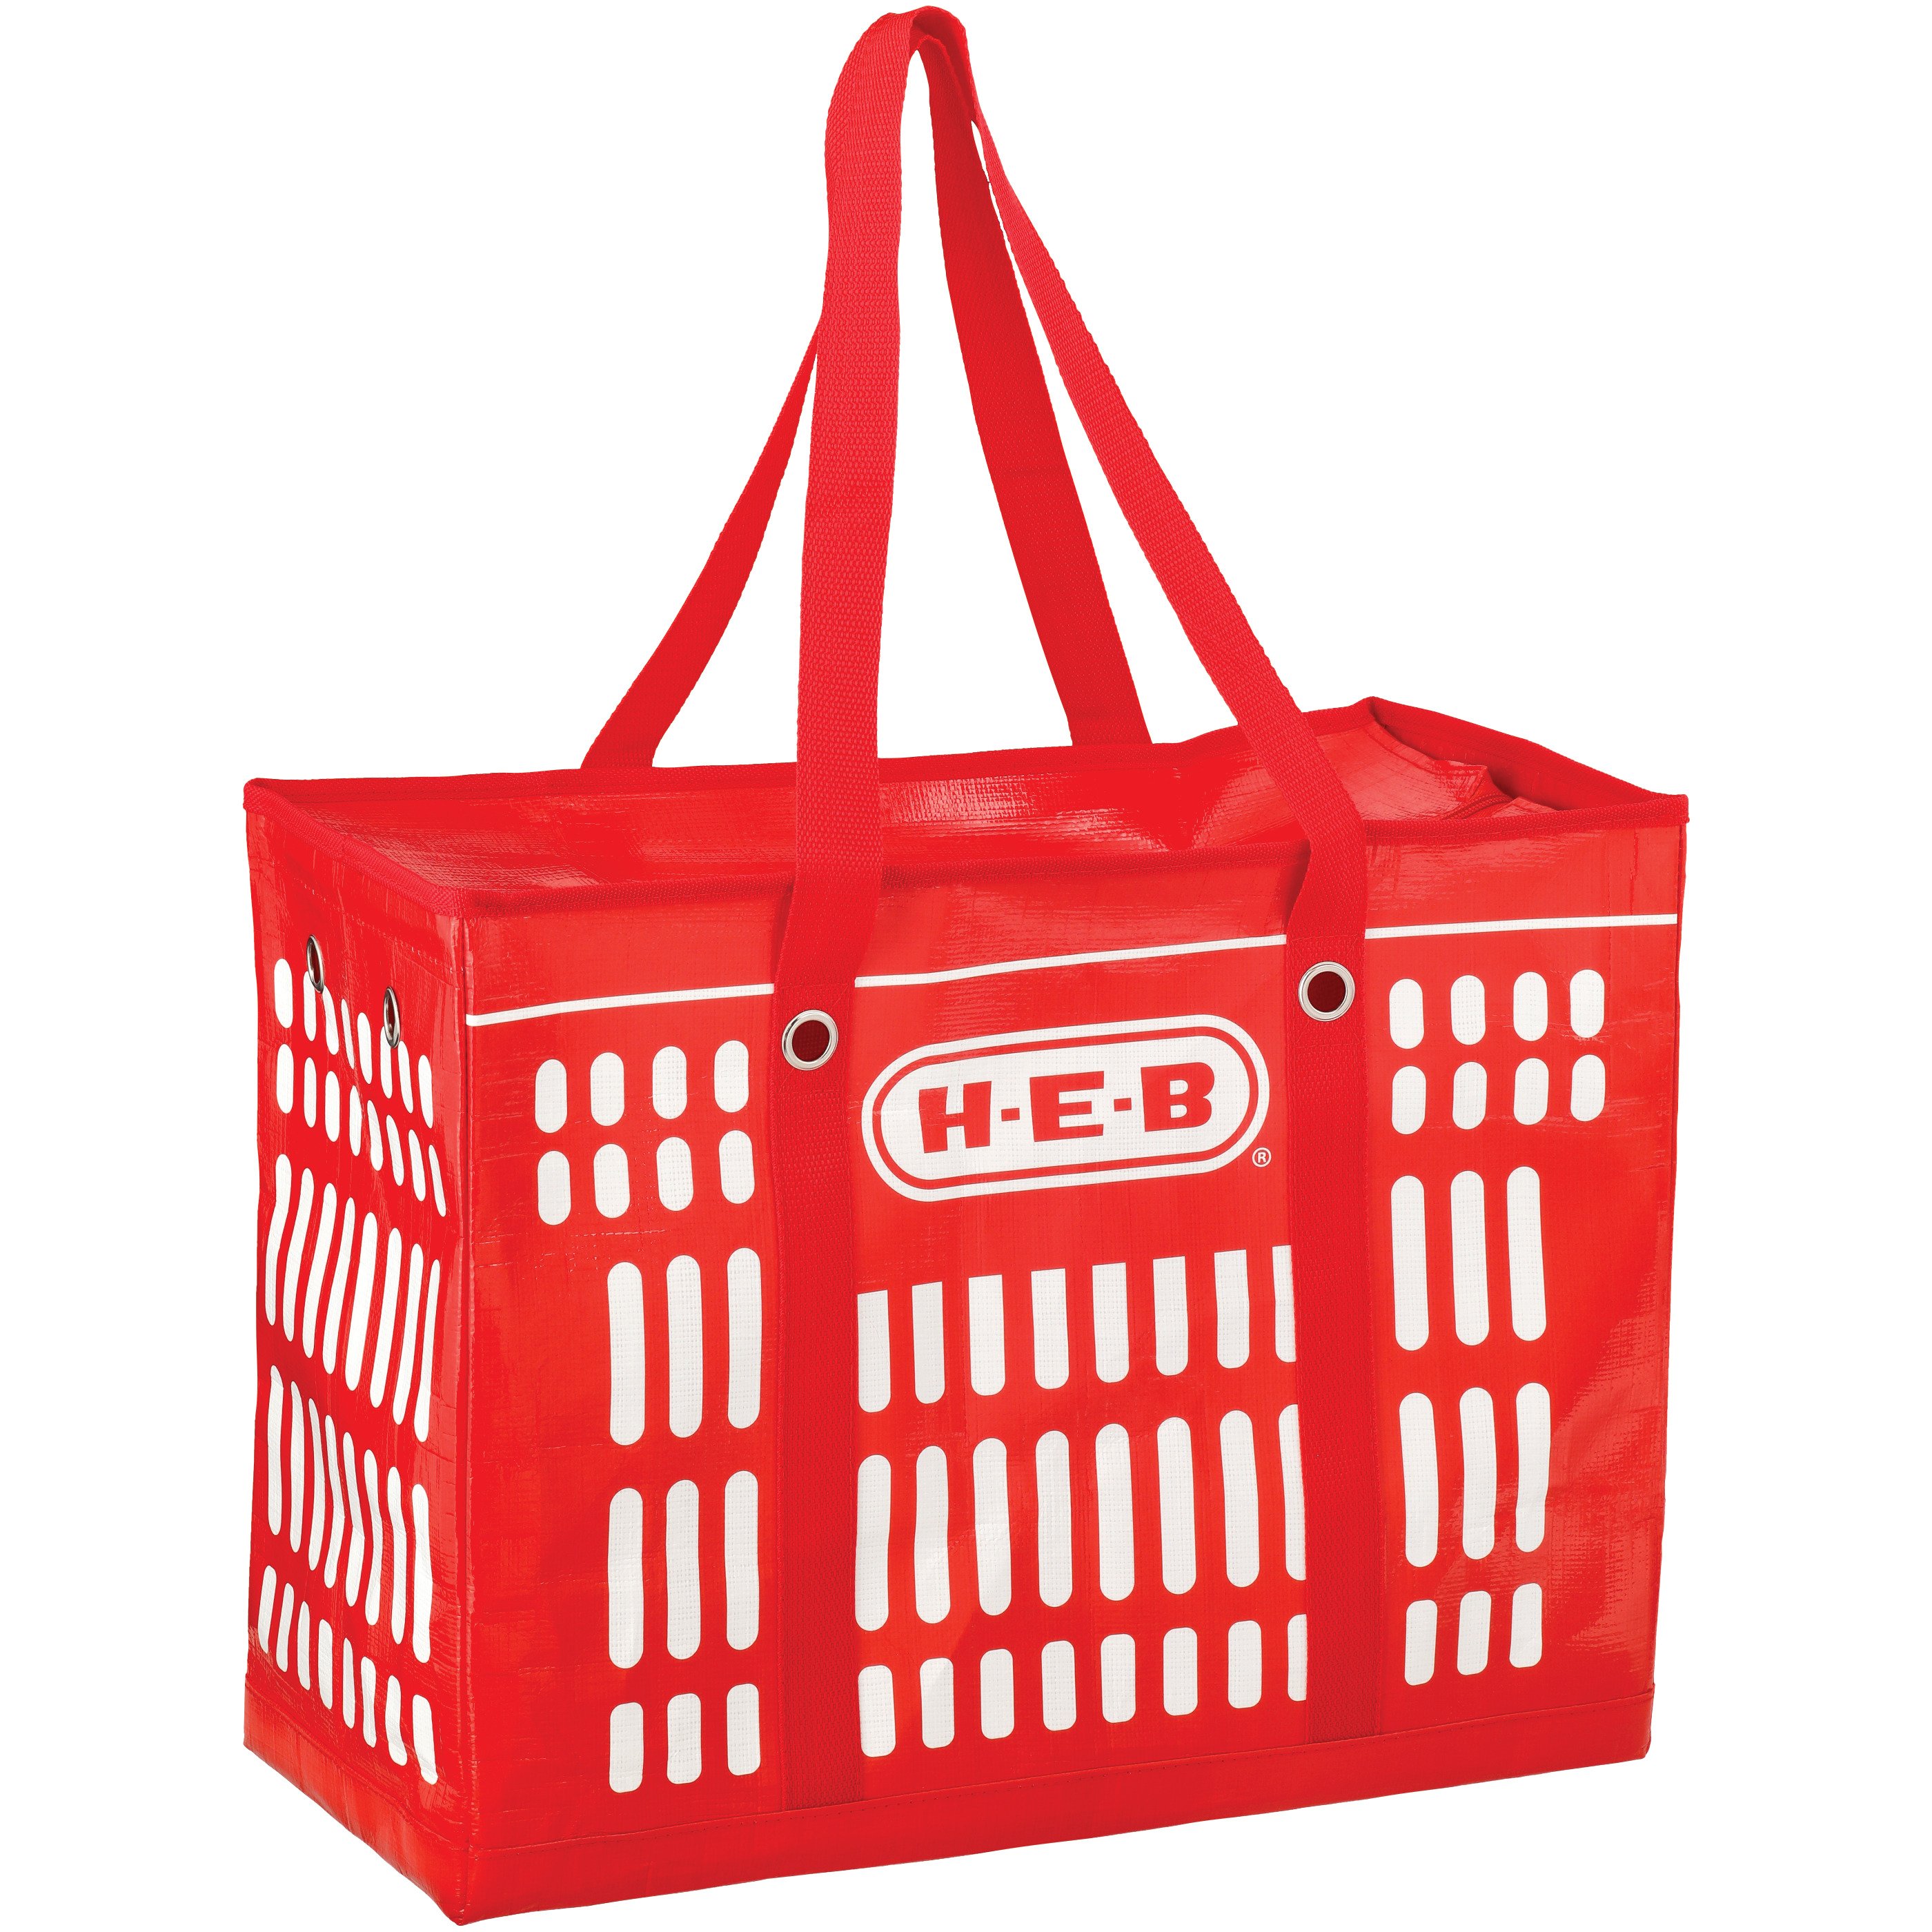 H-E-B Brand Shop Shopping Basket Tote Bag - Red - Shop Hats at H-E-B